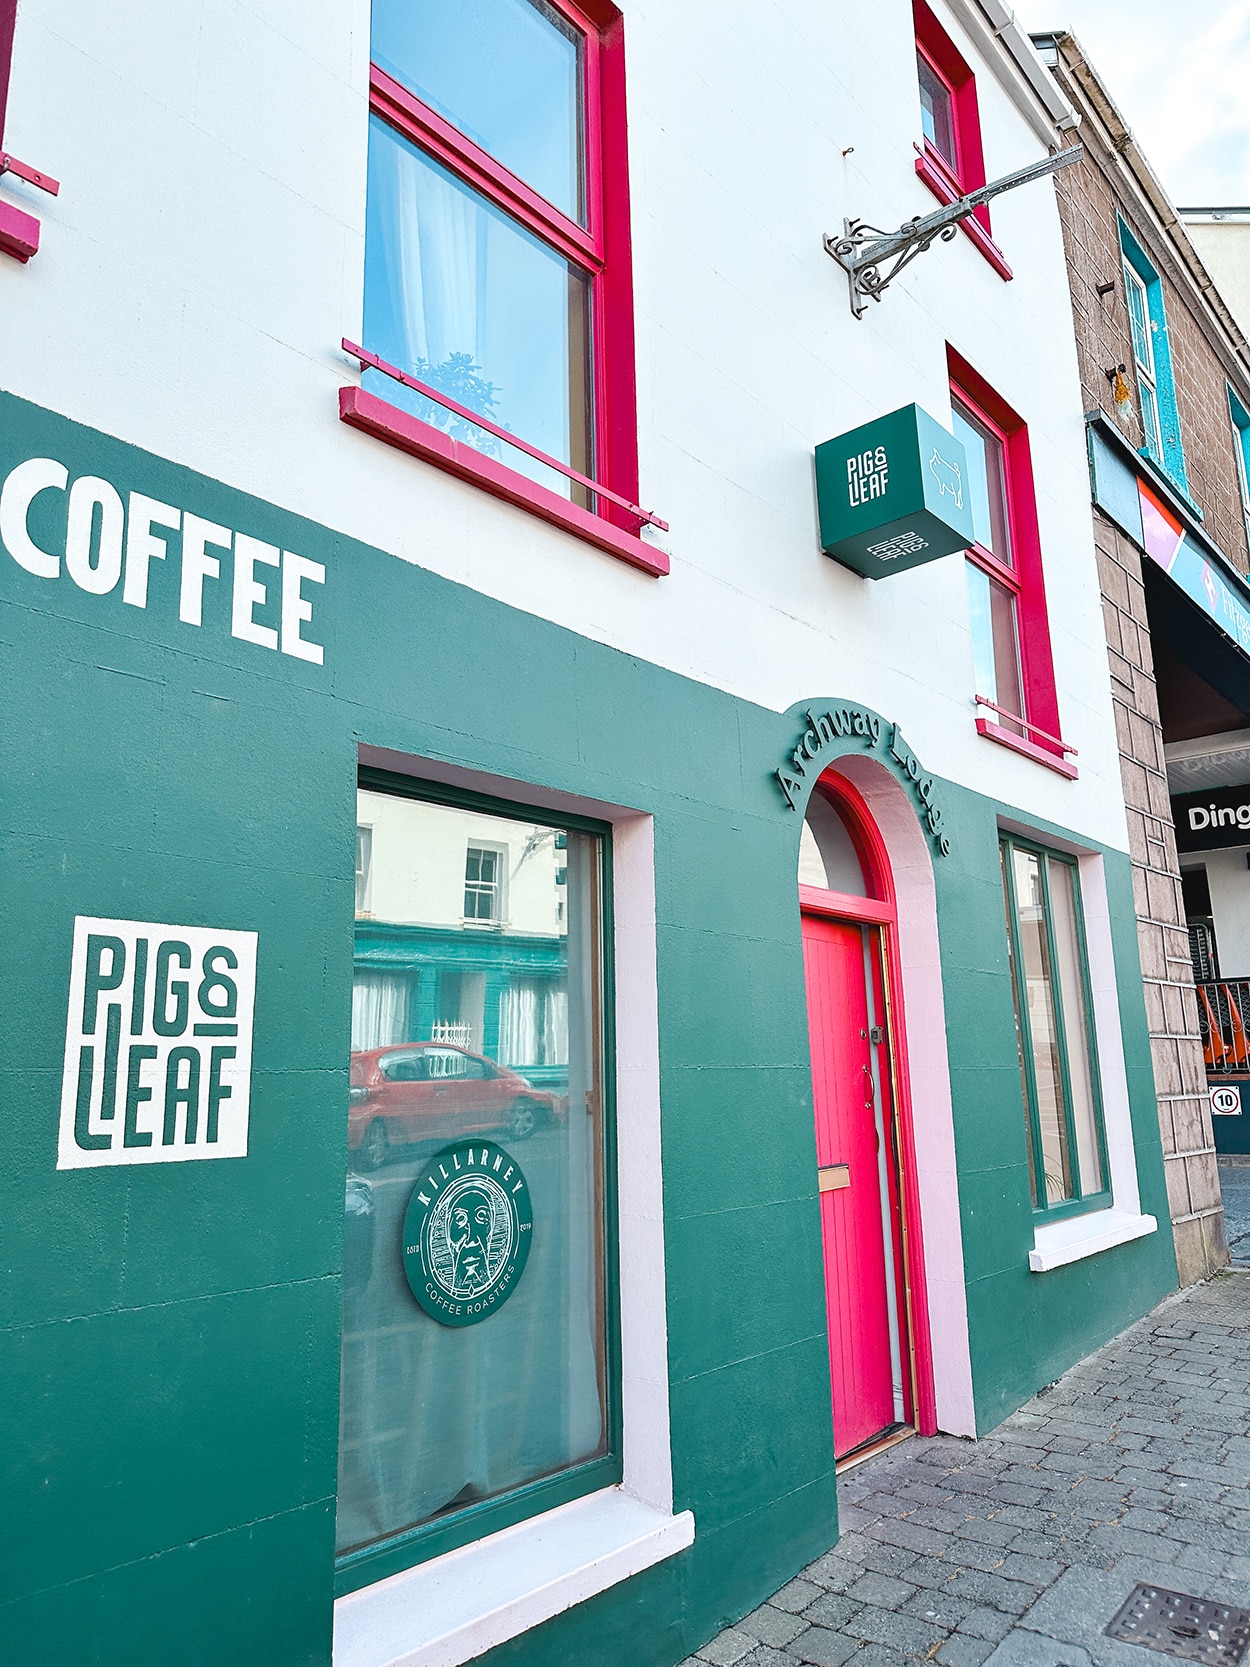 Pig and Leaf Restaurants in Dingle Ireland